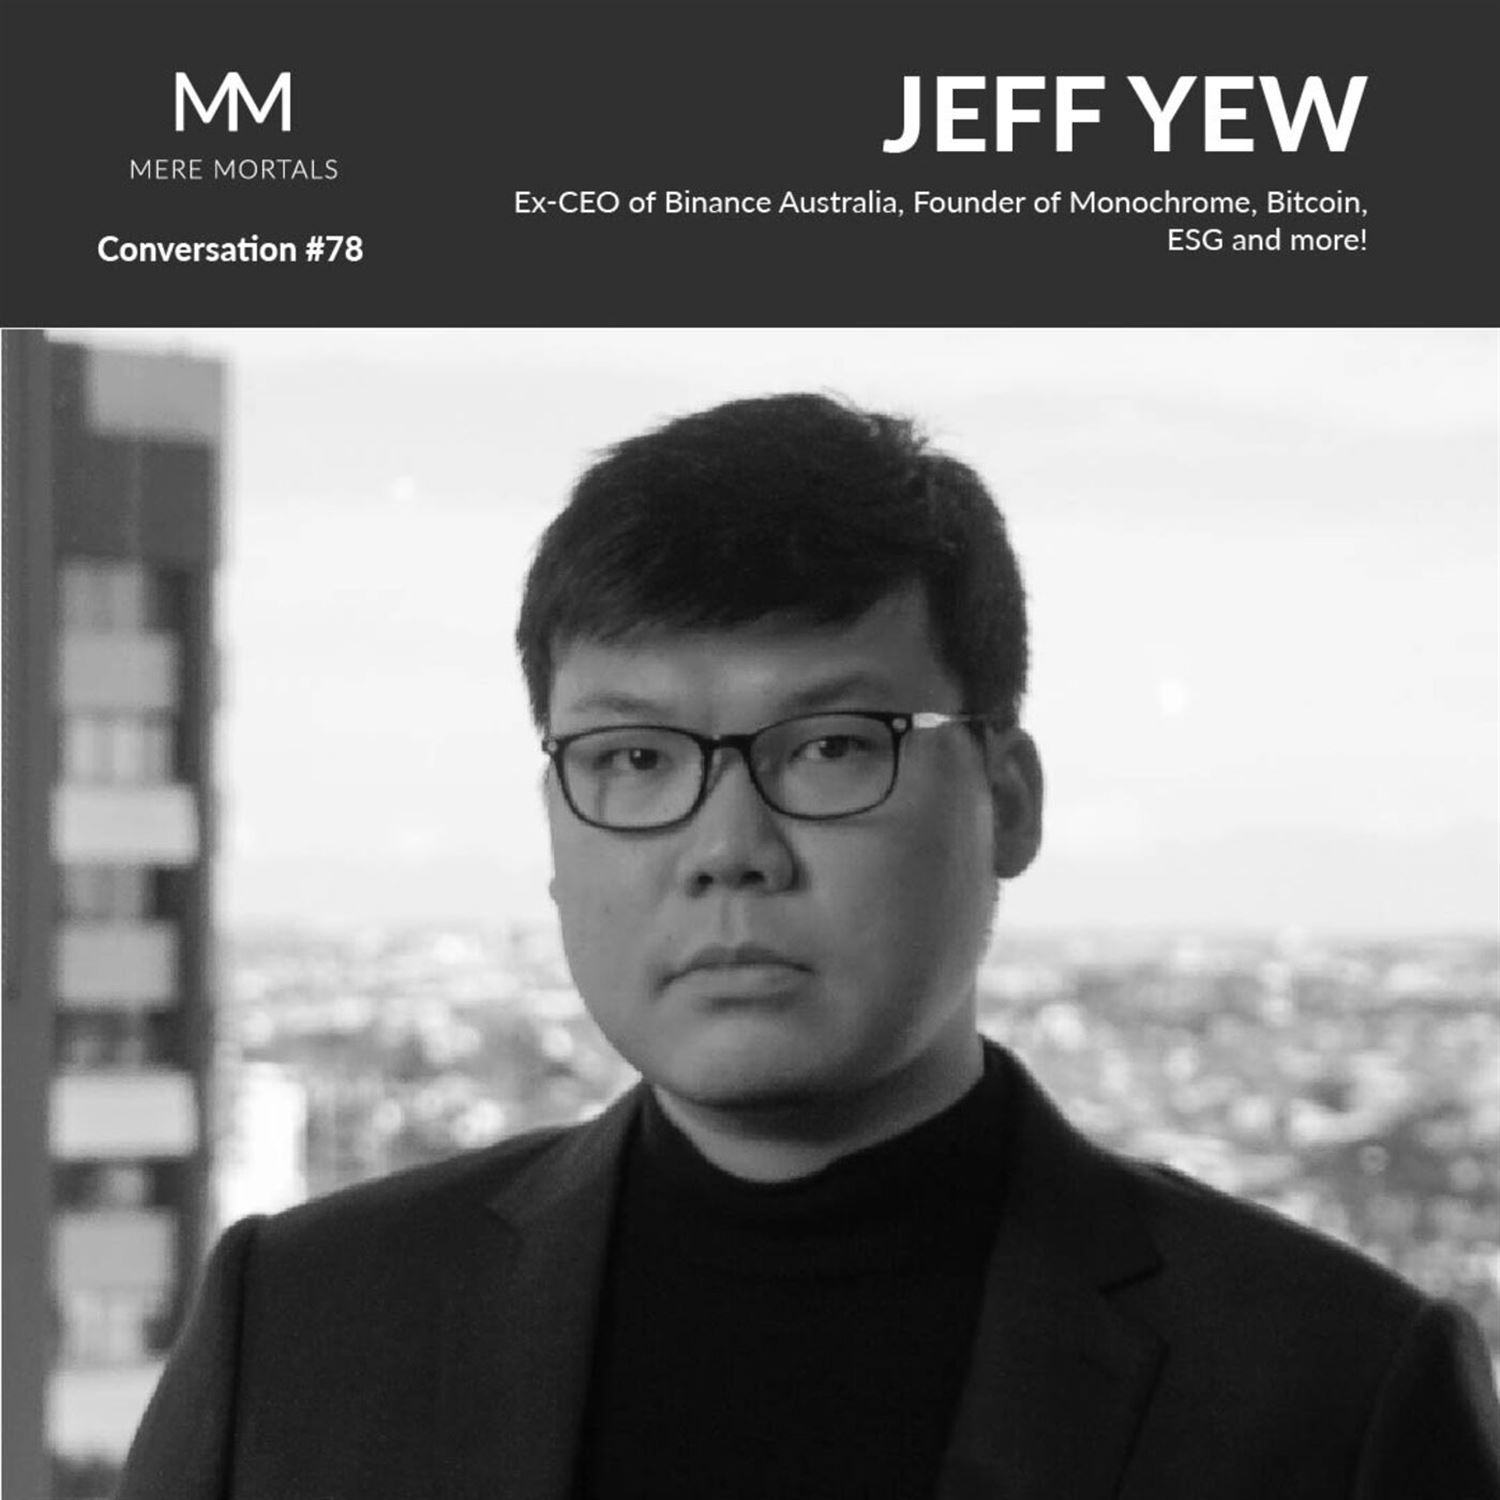 JEFF YEW | Ex-CEO of Binance Australia, Founder of Monochrome, Bitcoin, ESG and more!